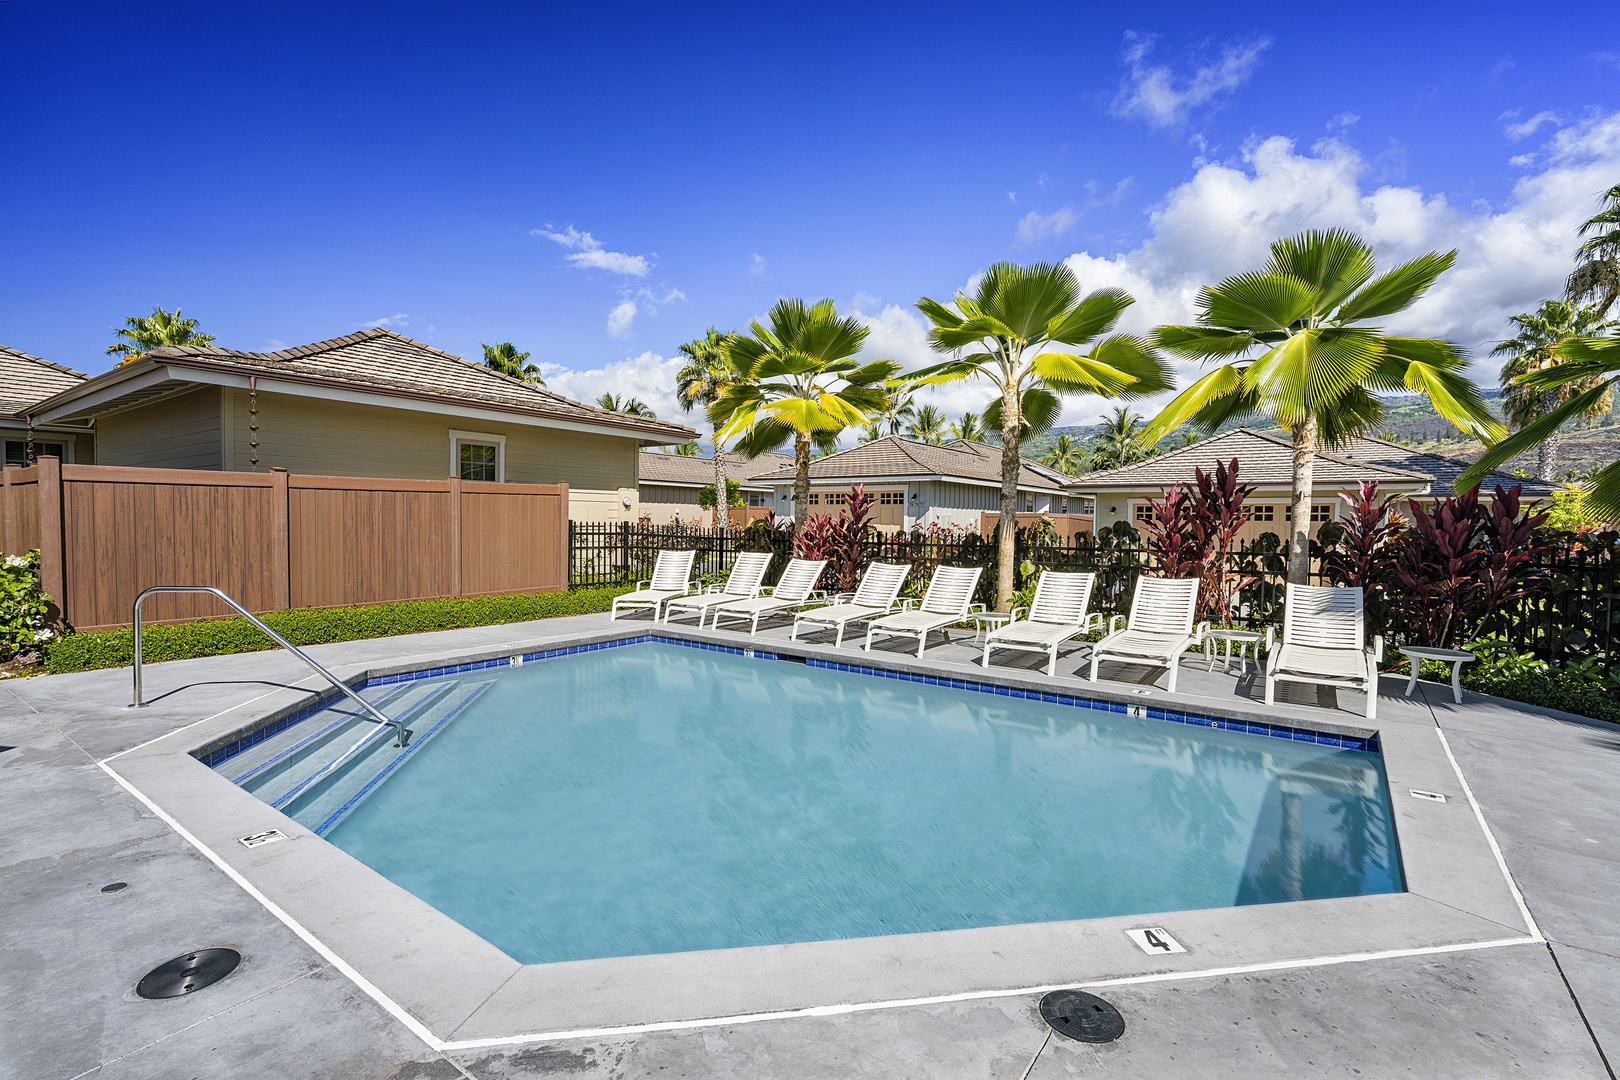 Kailua Kona Vacation Rentals, Green/Blue Combo - Complex pool